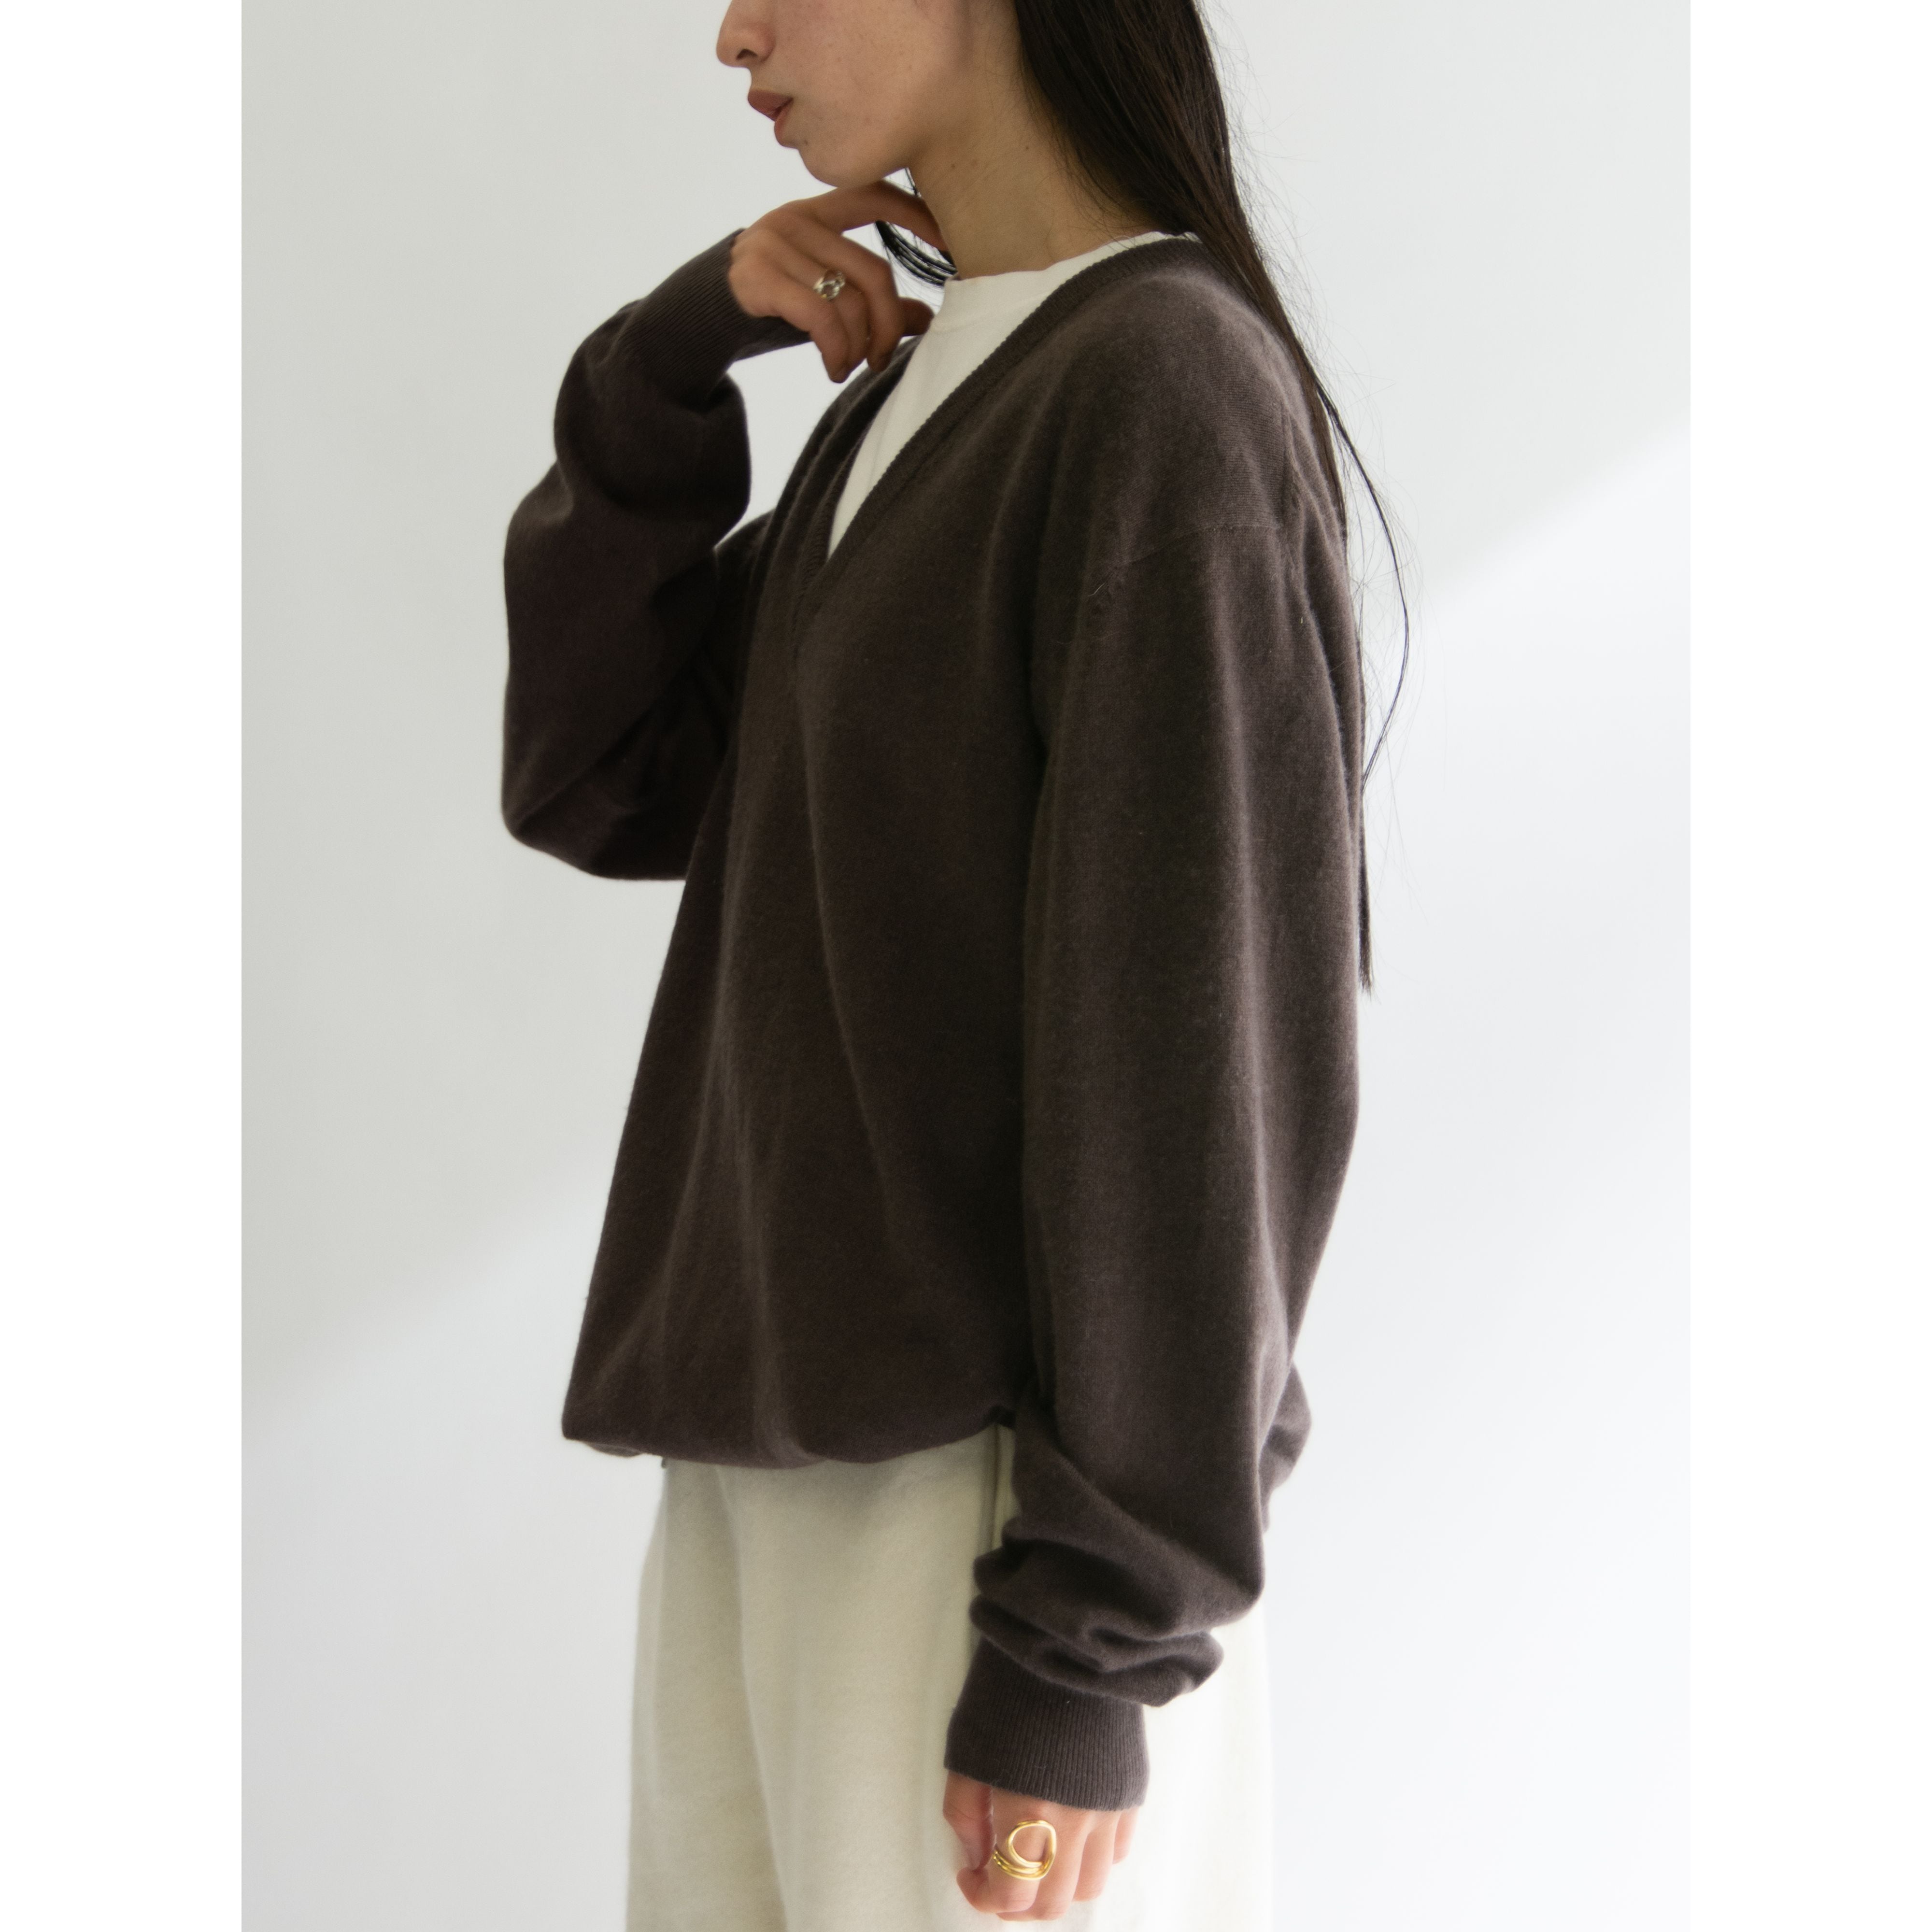 【Unknown Brand】Hand Made in Nepal 100% Cashmere V-neck Sweater（ネパール製 カシミアVネックニット セーター）